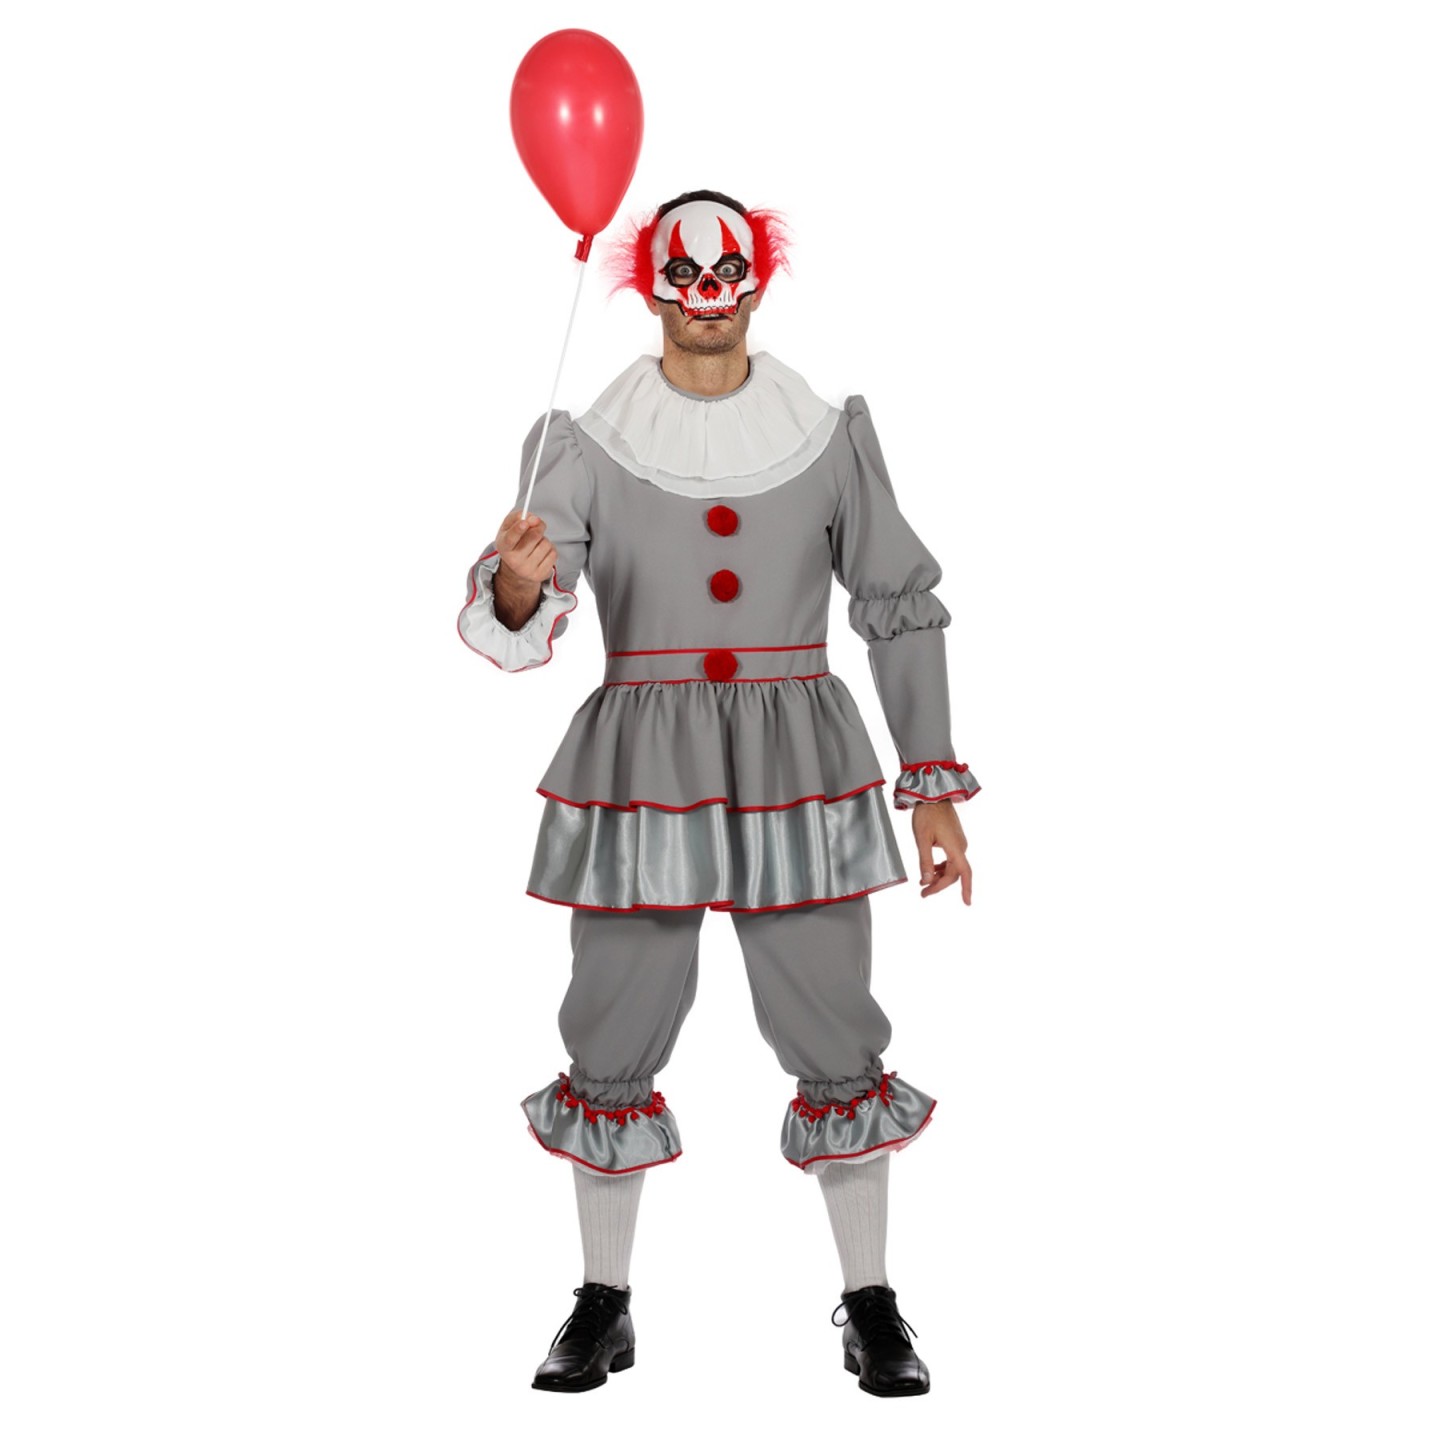 Pennywise kostuum killer clown IT halloween